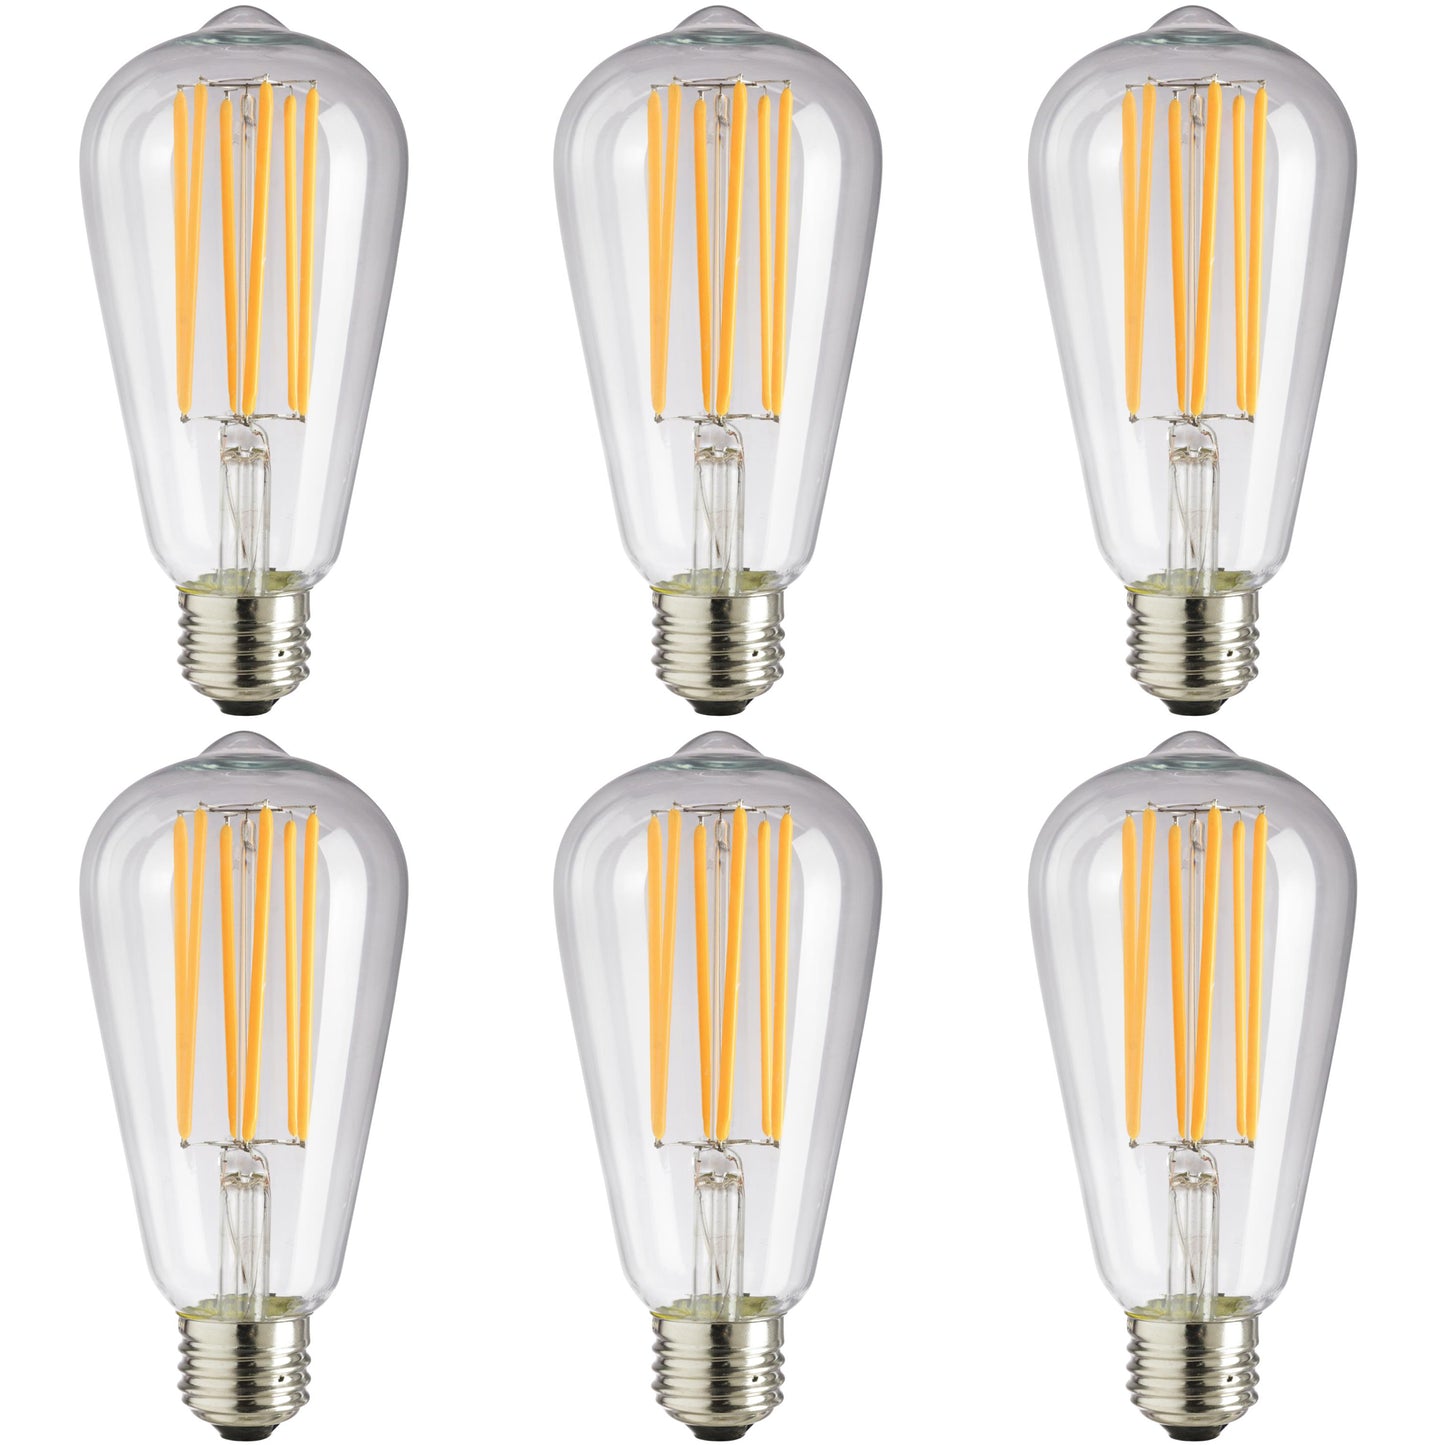 Sunlite LED Vintage S19 Edison 6W (60W Equivalent) Light Bulb Medium (E26) Base, Warm White